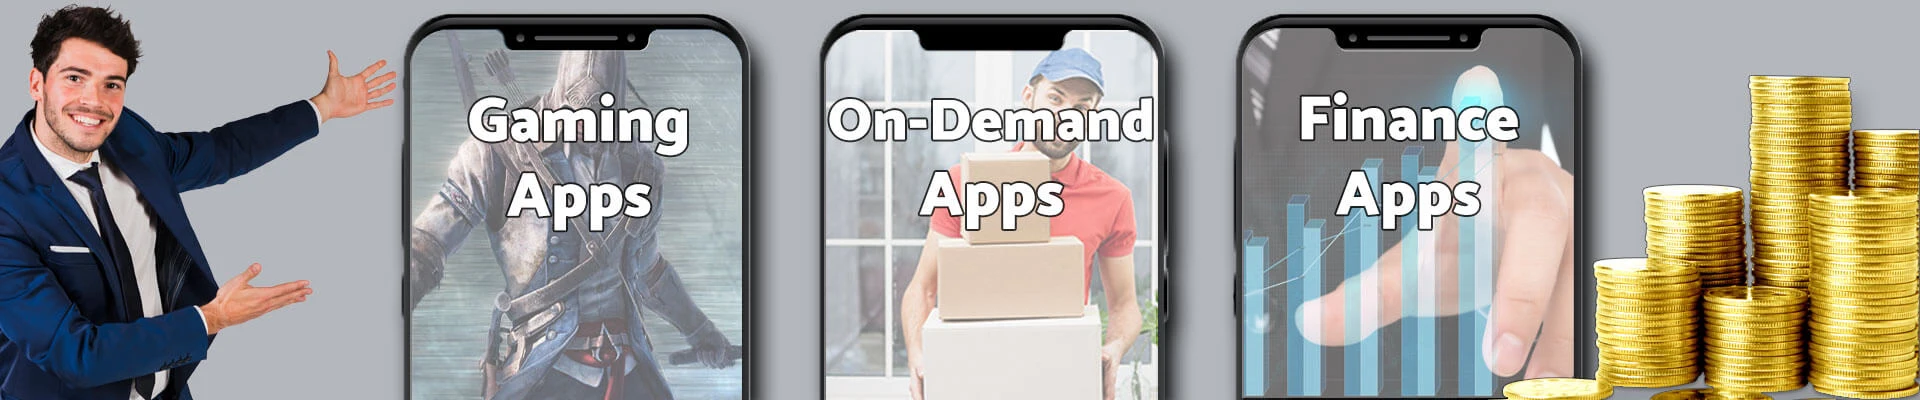 Mobile App Development -Auxano Global Services